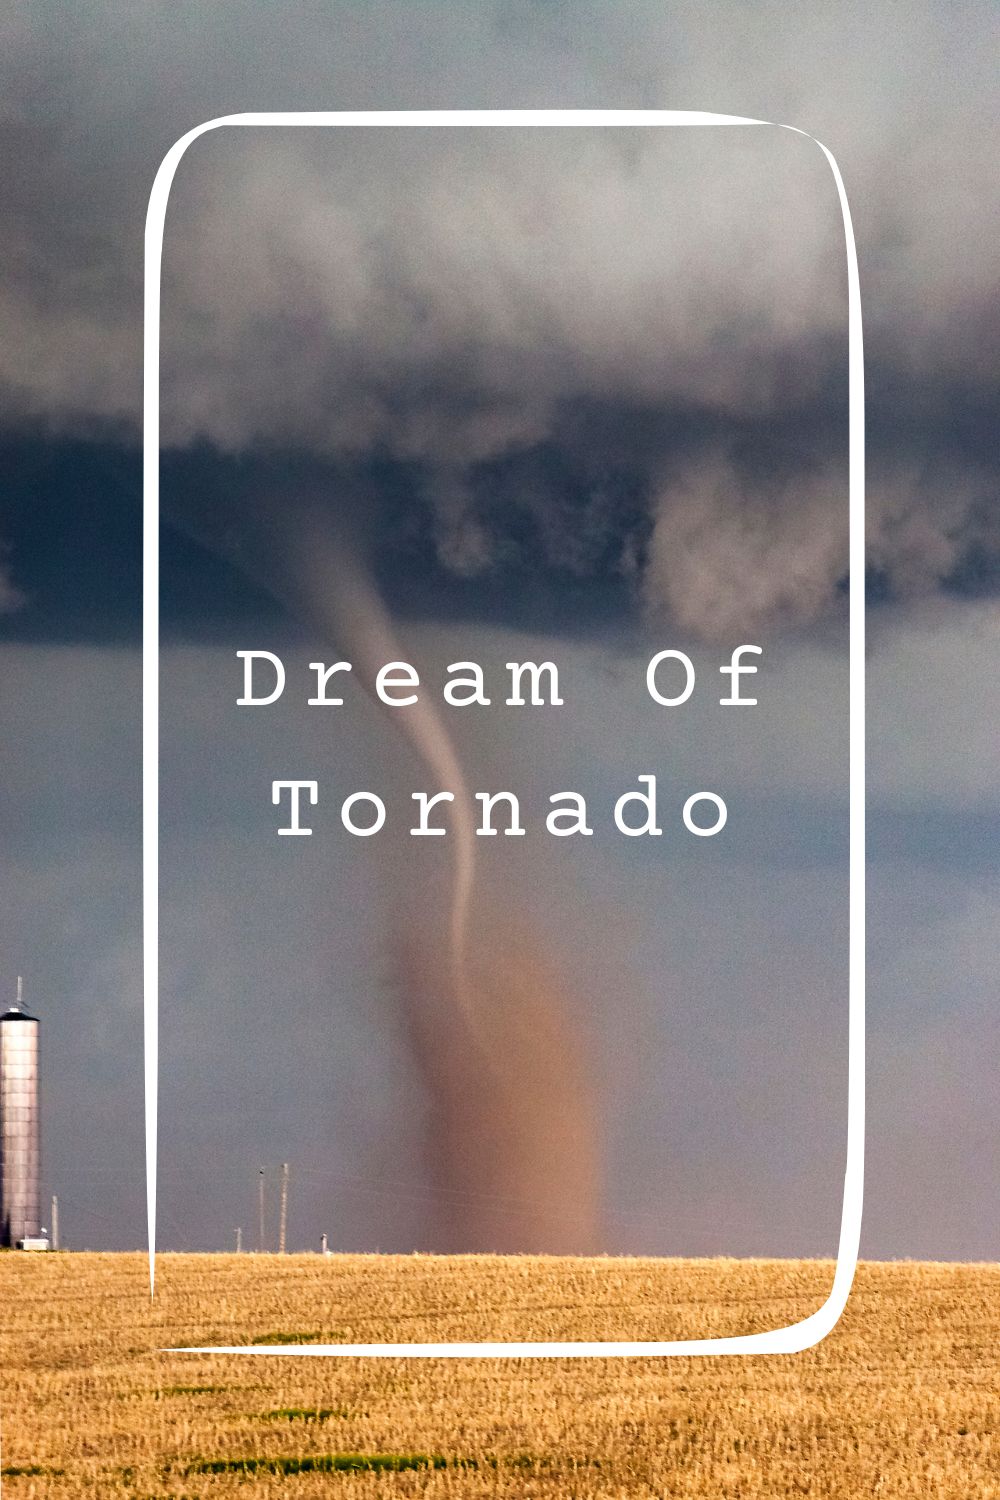 Dream Of Tornado Meanings 1